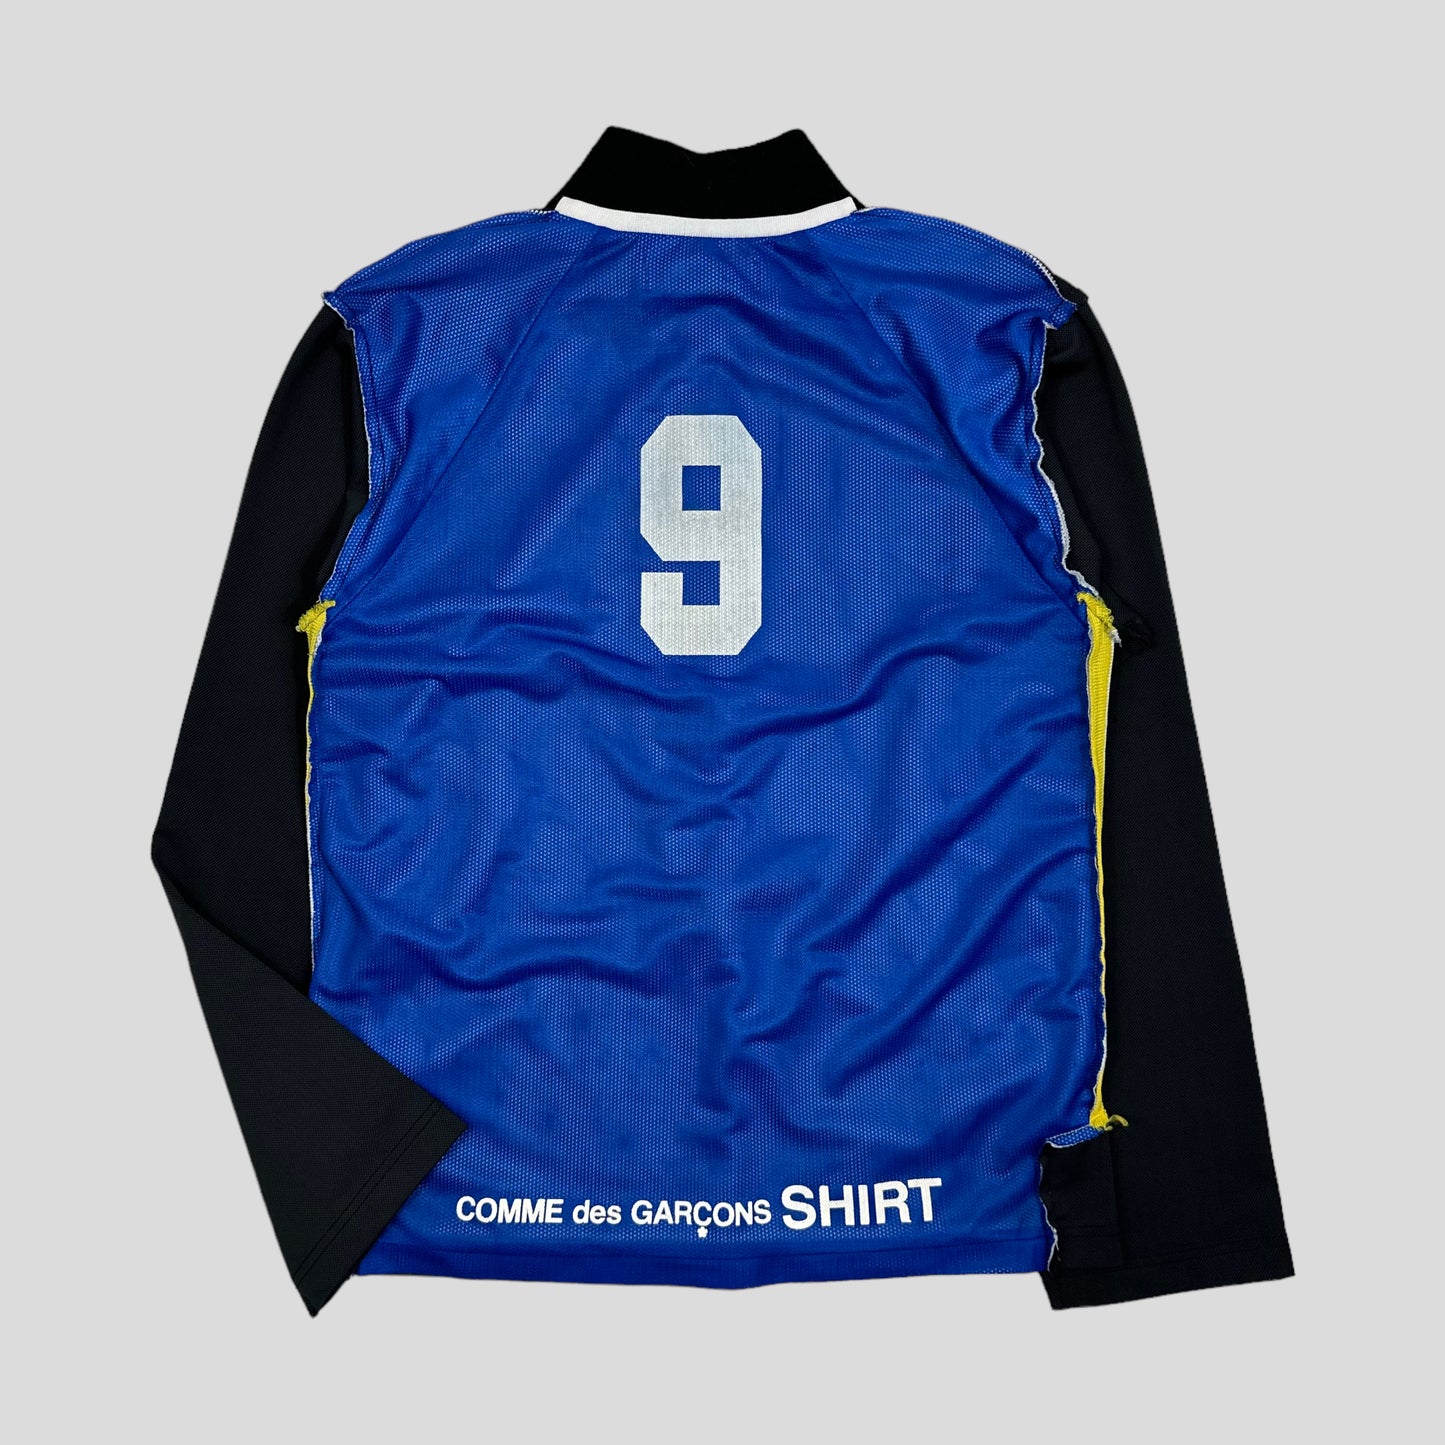 CDG Shirt 00’s Technical Spellout Mesh Jersey Jacket - M